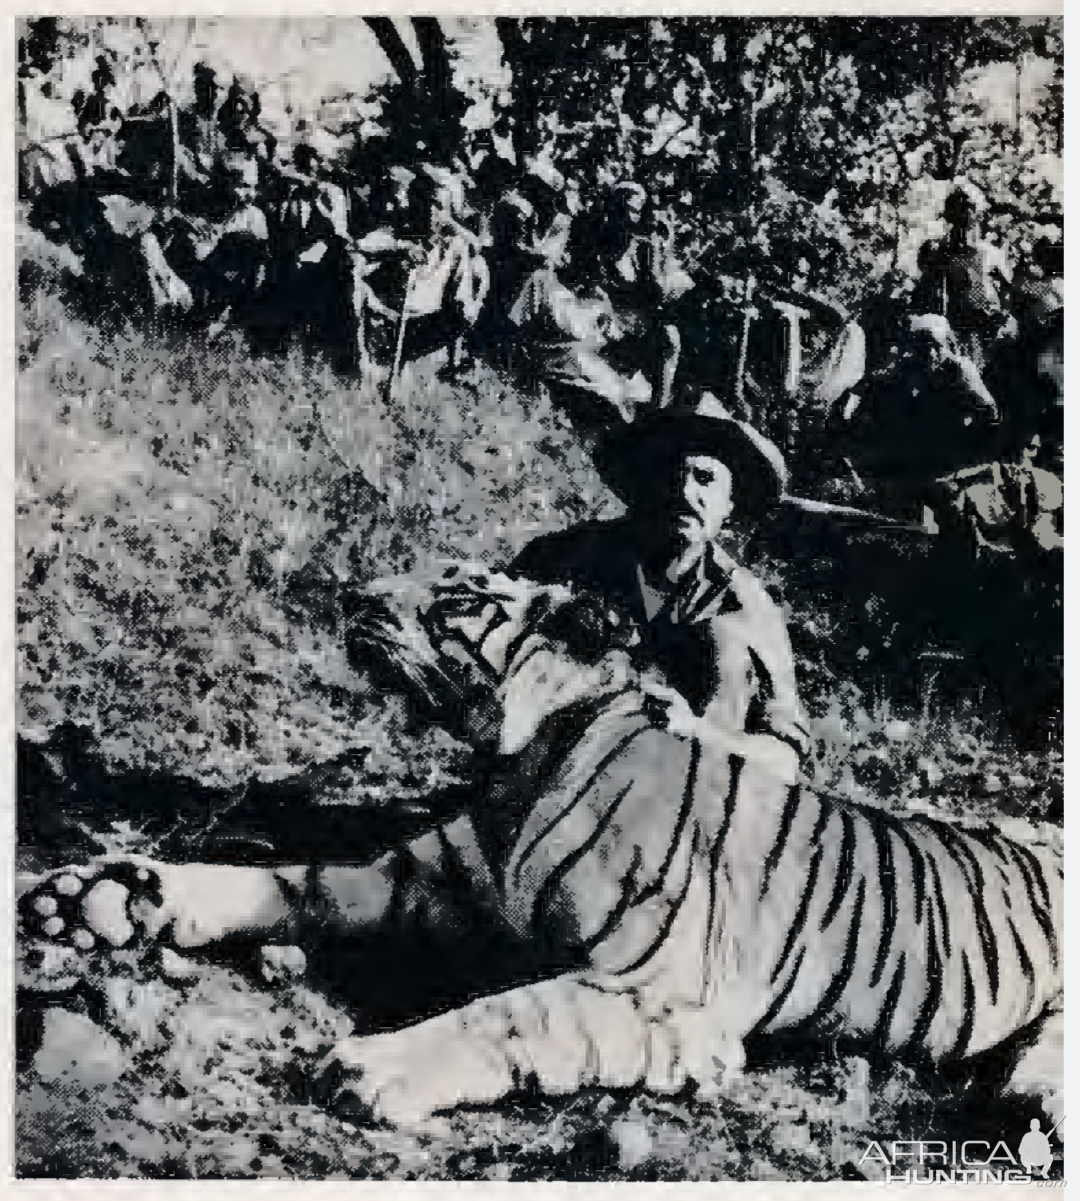 India Hunt Bengal Tiger